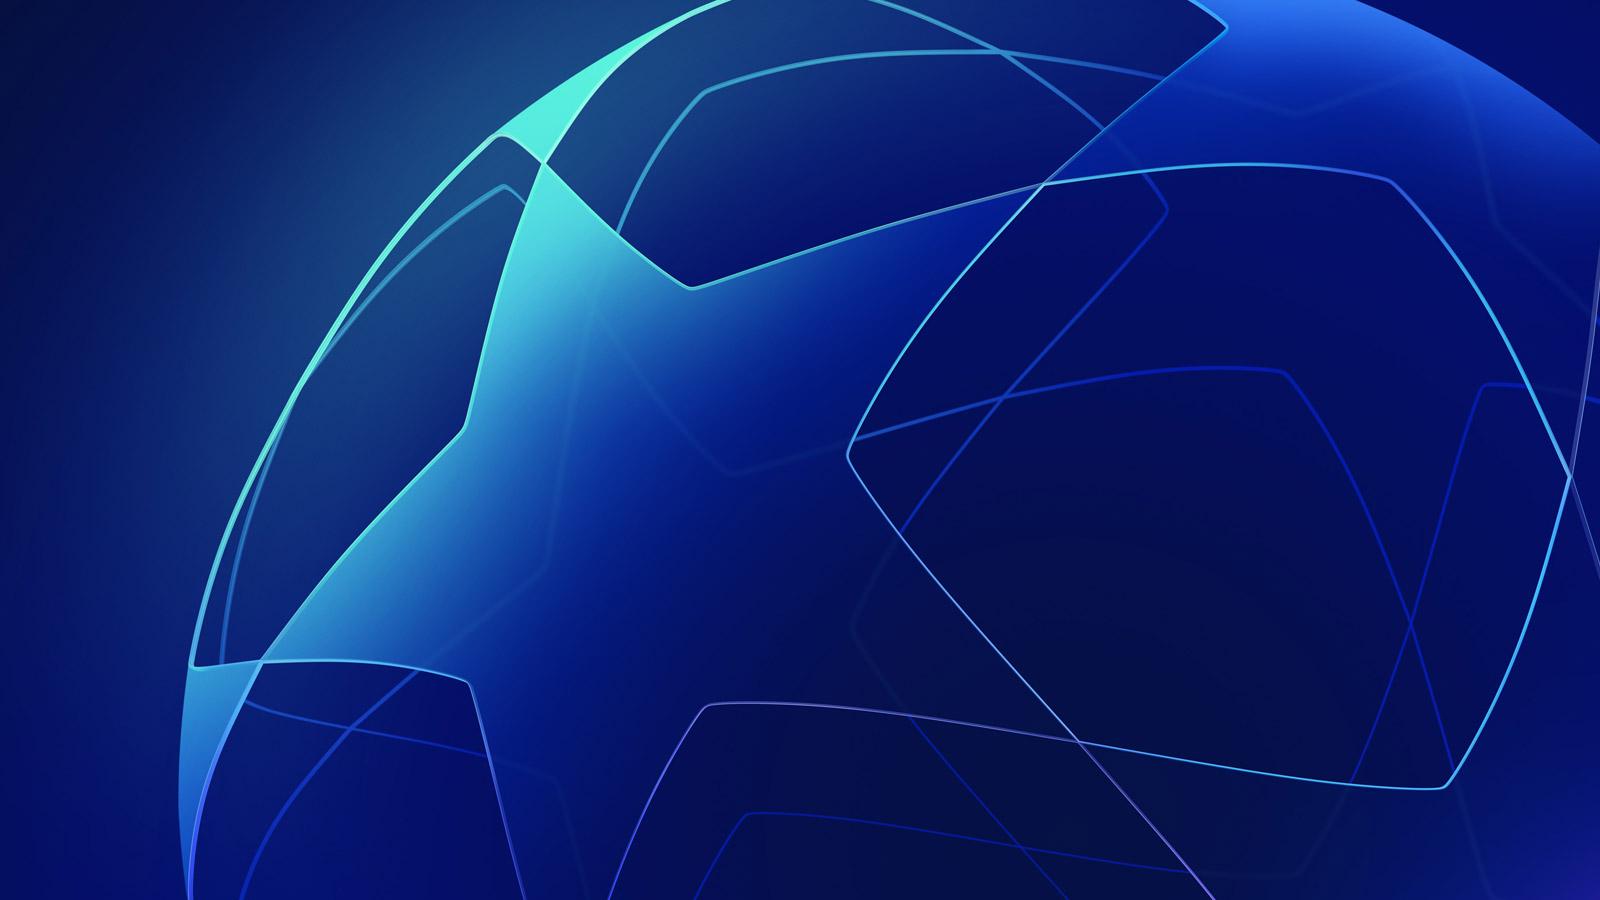 UEFA Champions League 2019 new branding free design